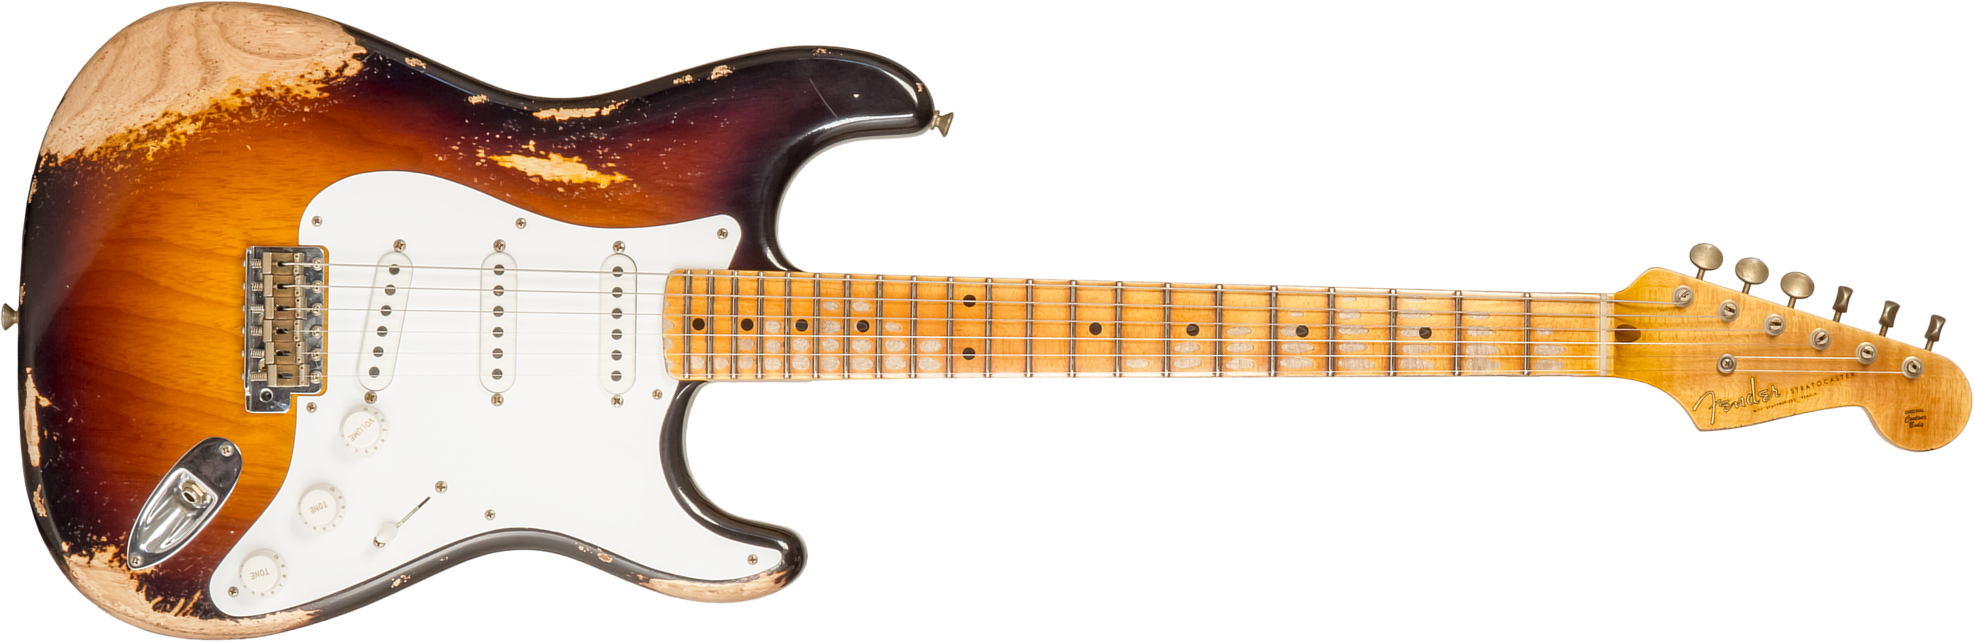 Fender Custom Shop Strat 1954 70th Anniv. 3s Trem Mn #xn4308 - Heavy Relic Wide Fade 2-color Sunburst - Str shape electric guitar - Main picture